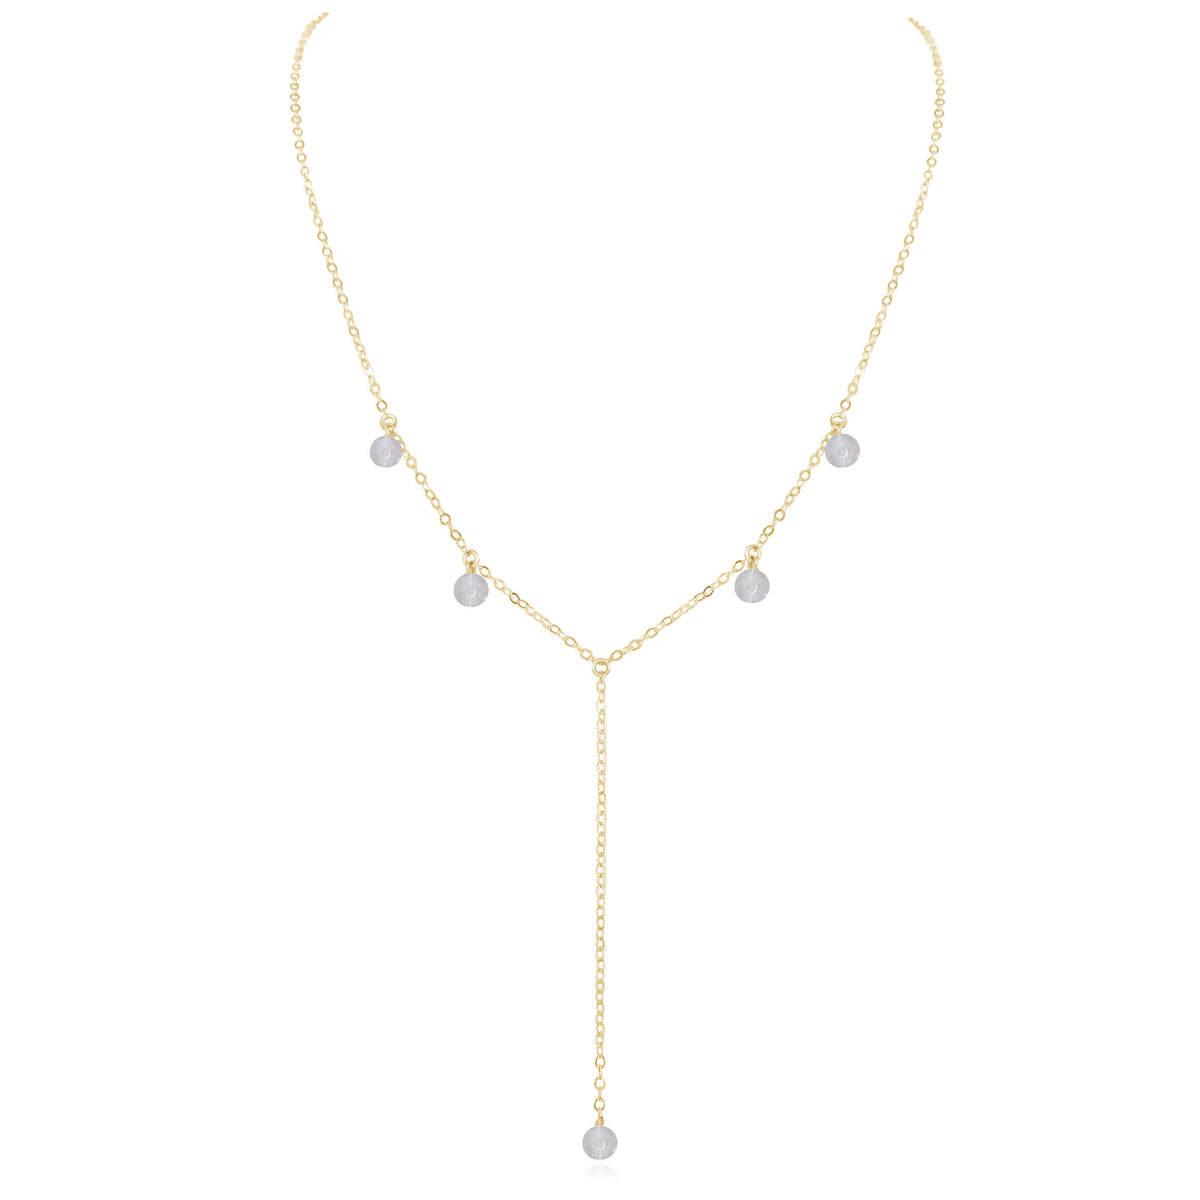 Boho Y Necklace - Crystal Quartz - Luna Tide Handmade Jewellery